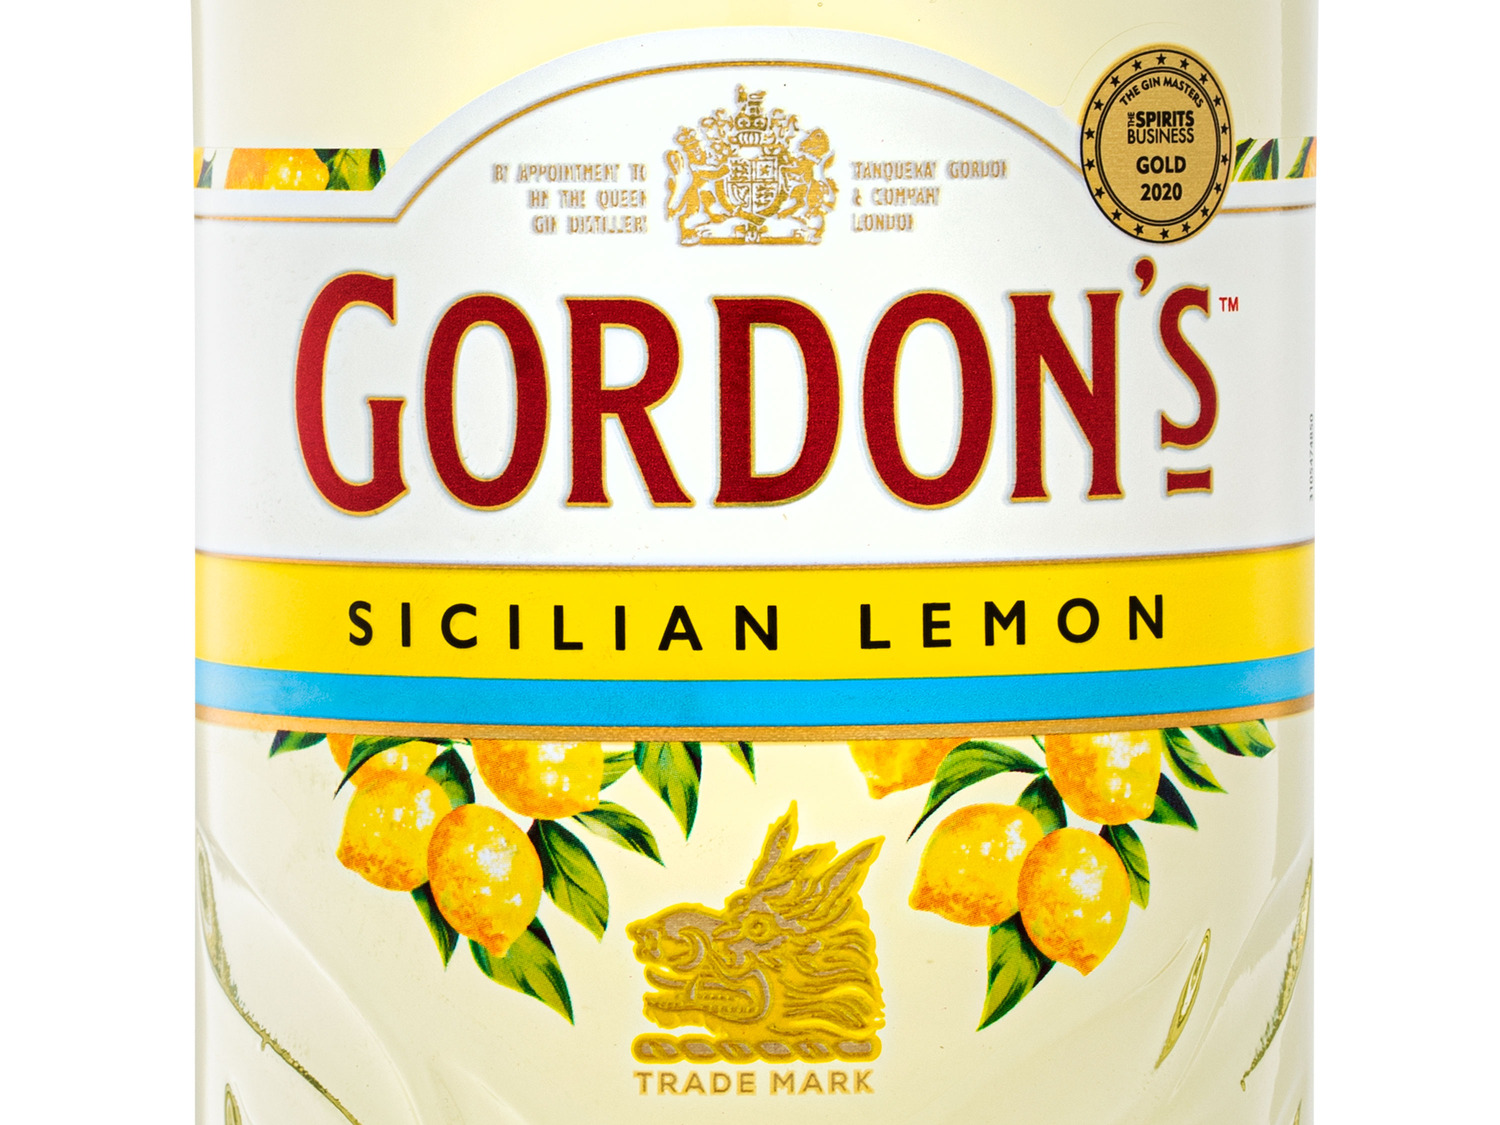 GORDON\'S Sicilian Lemon Distilled Gin 37,5% Vol | LIDL